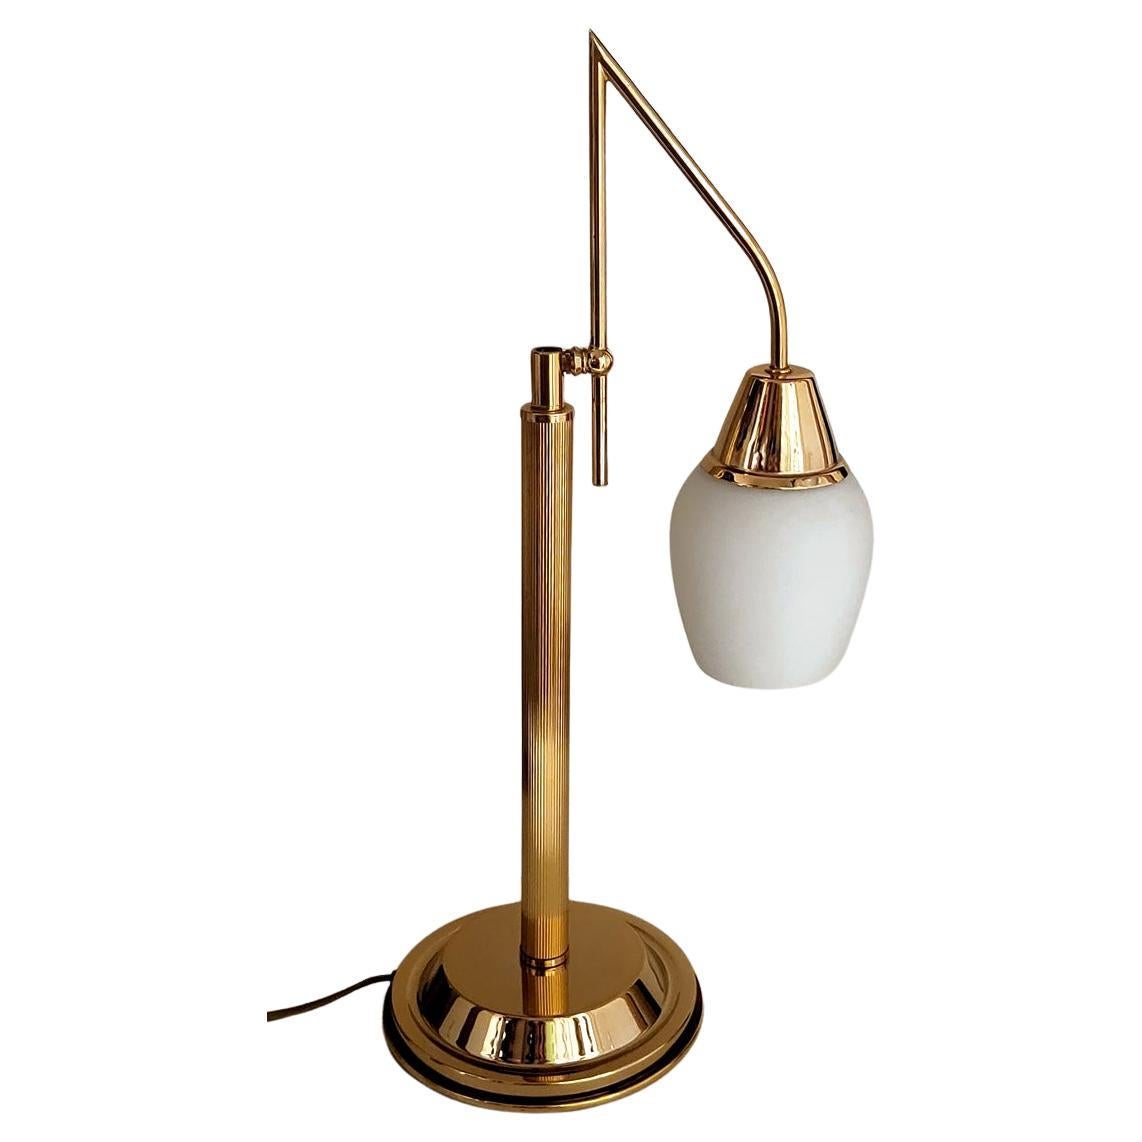 German Vintage Adjustable Brass and Glass Table Desk Lamp 1970s